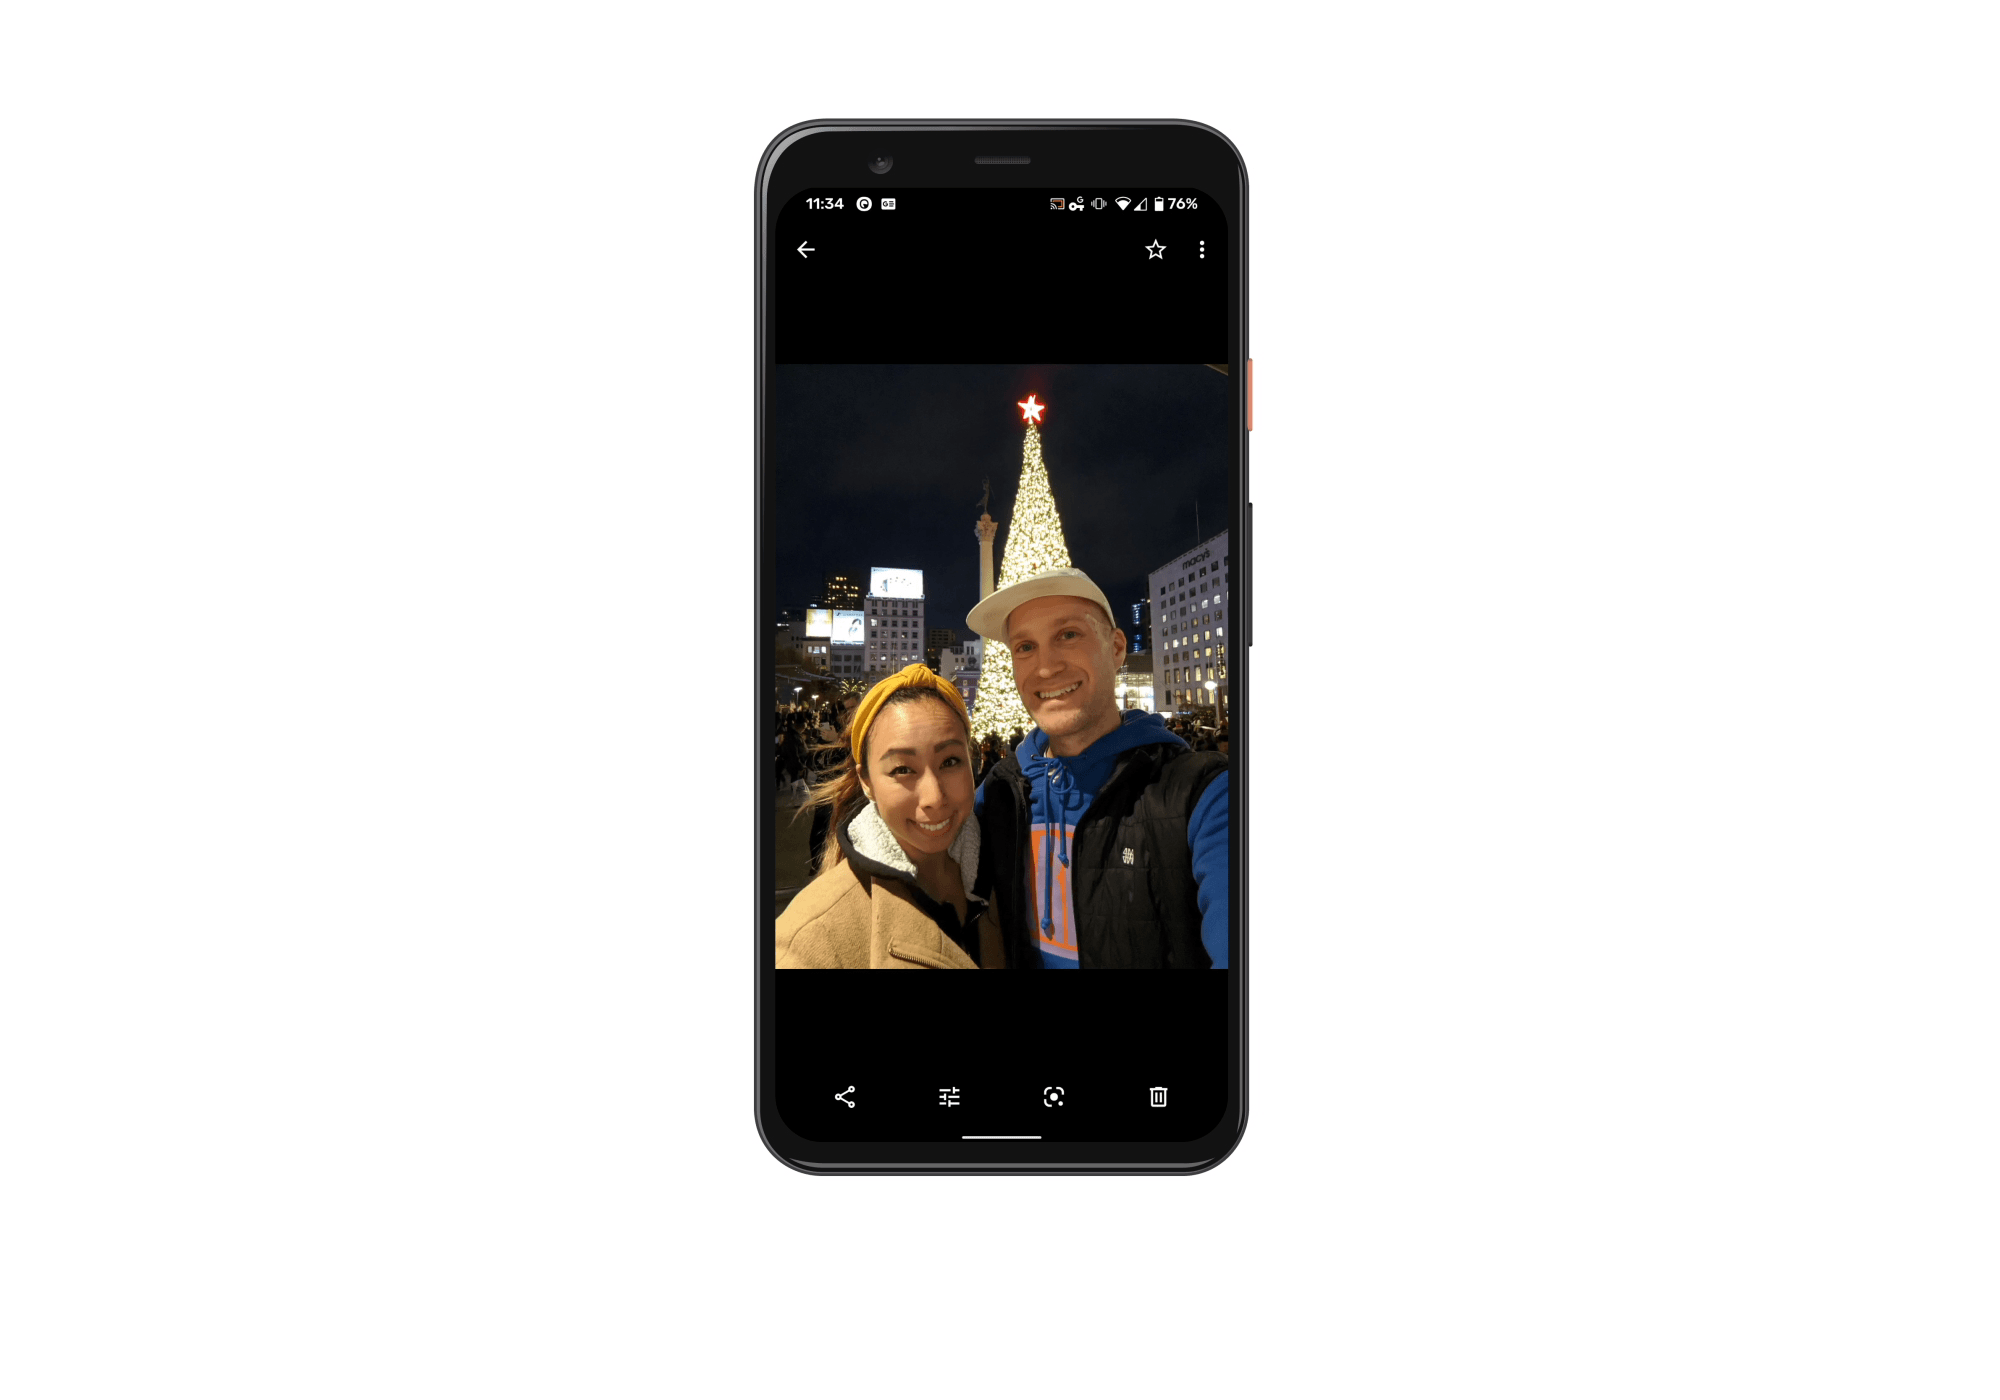 Phone UI displaying portrait blur functionality